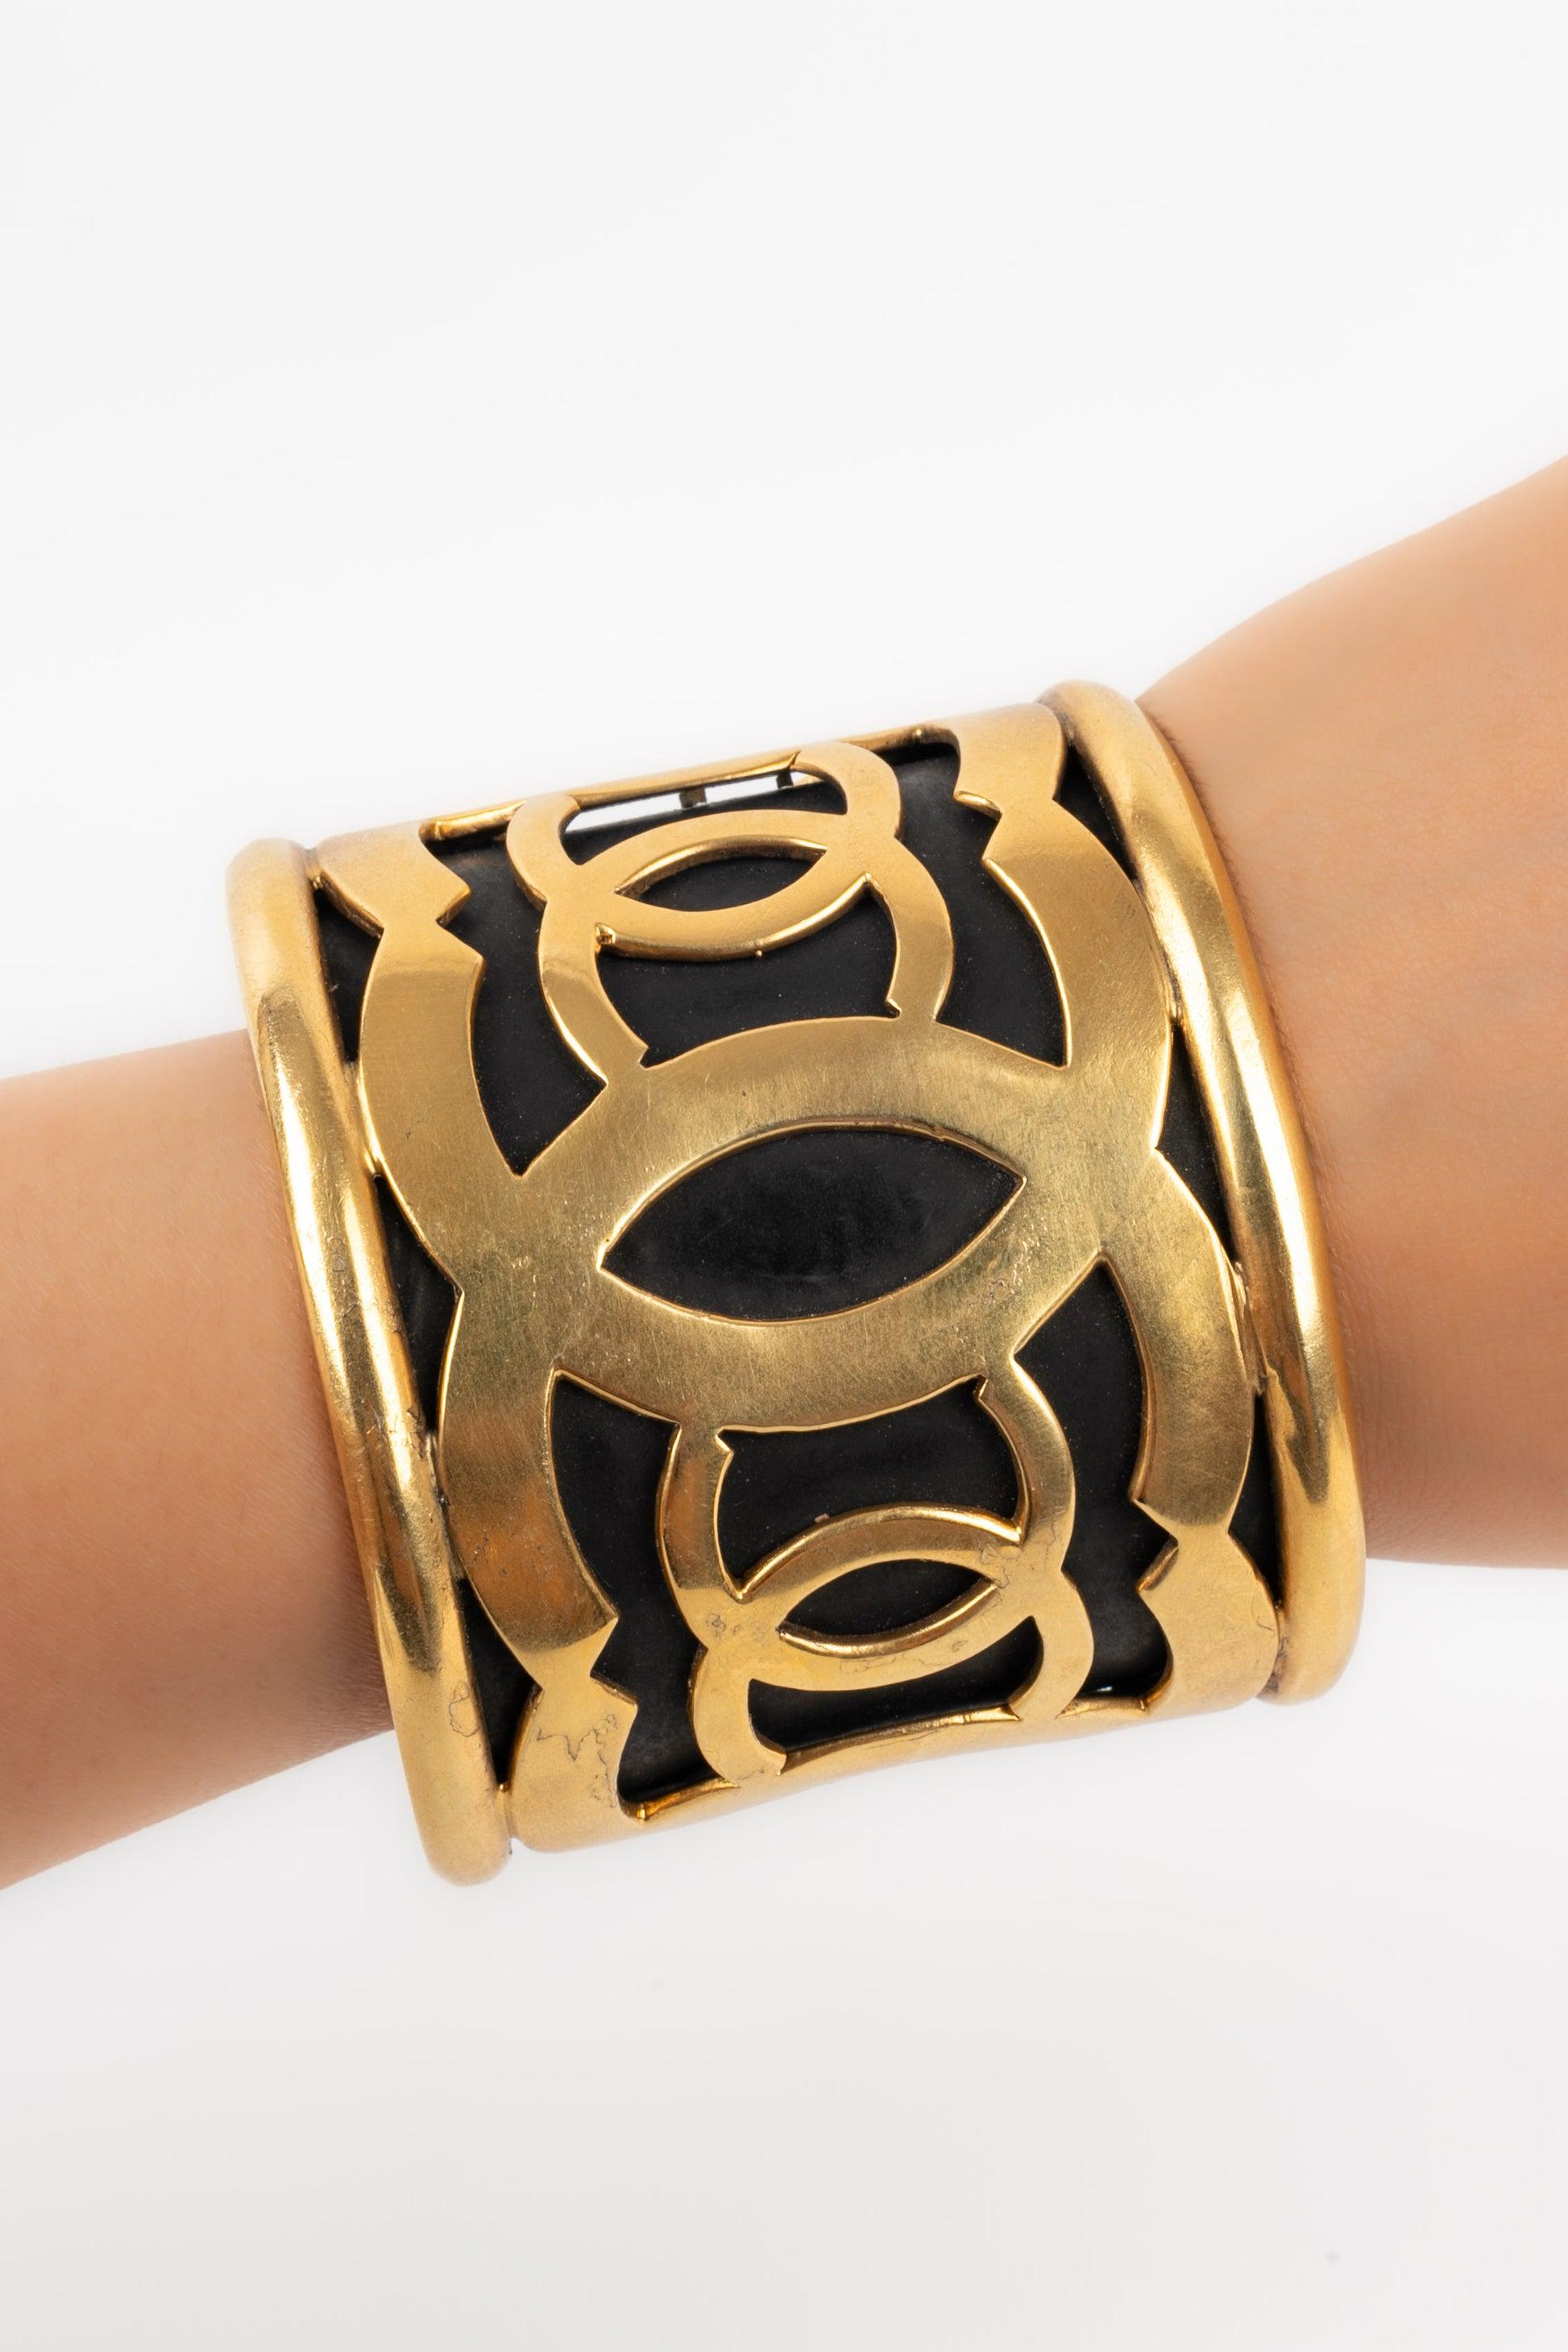 Chanel Cuff Bracelet in Golden Metal on a Black Background For Sale 5